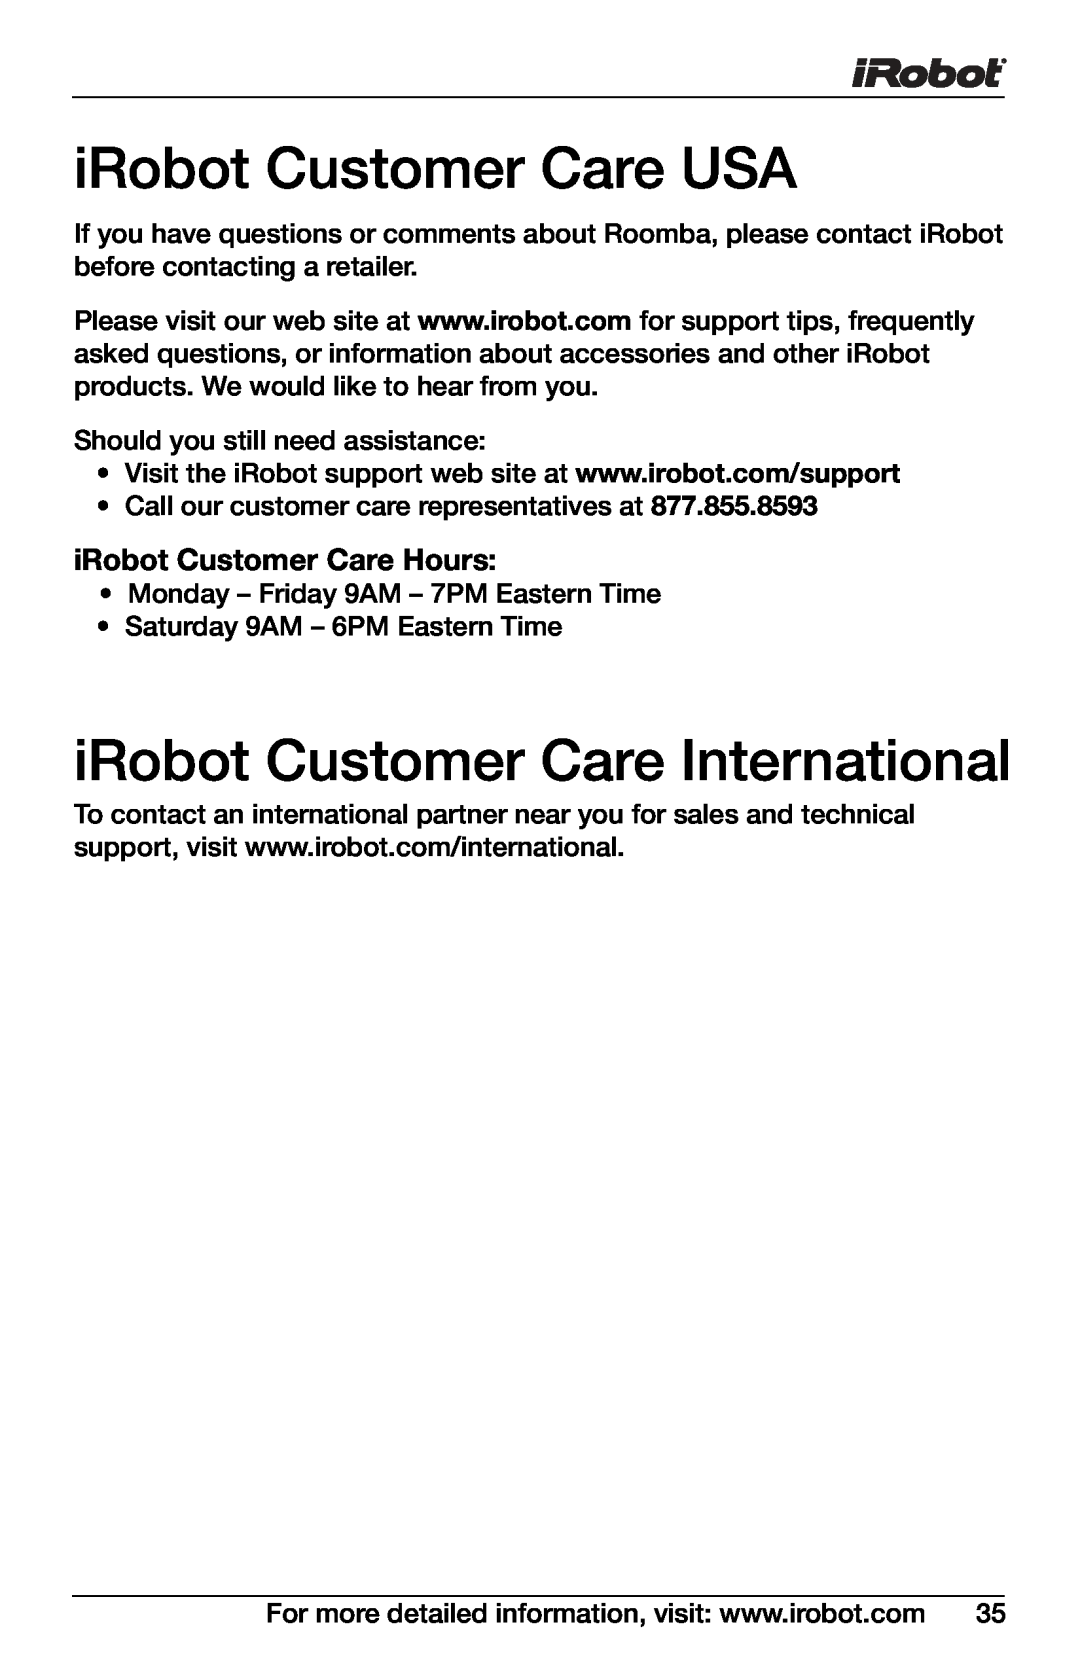 iRobot 531, 611, 571, 560, 540, 563 iRobot Customer Care USA, iRobot Customer Care International, iRobot Customer Care Hours 